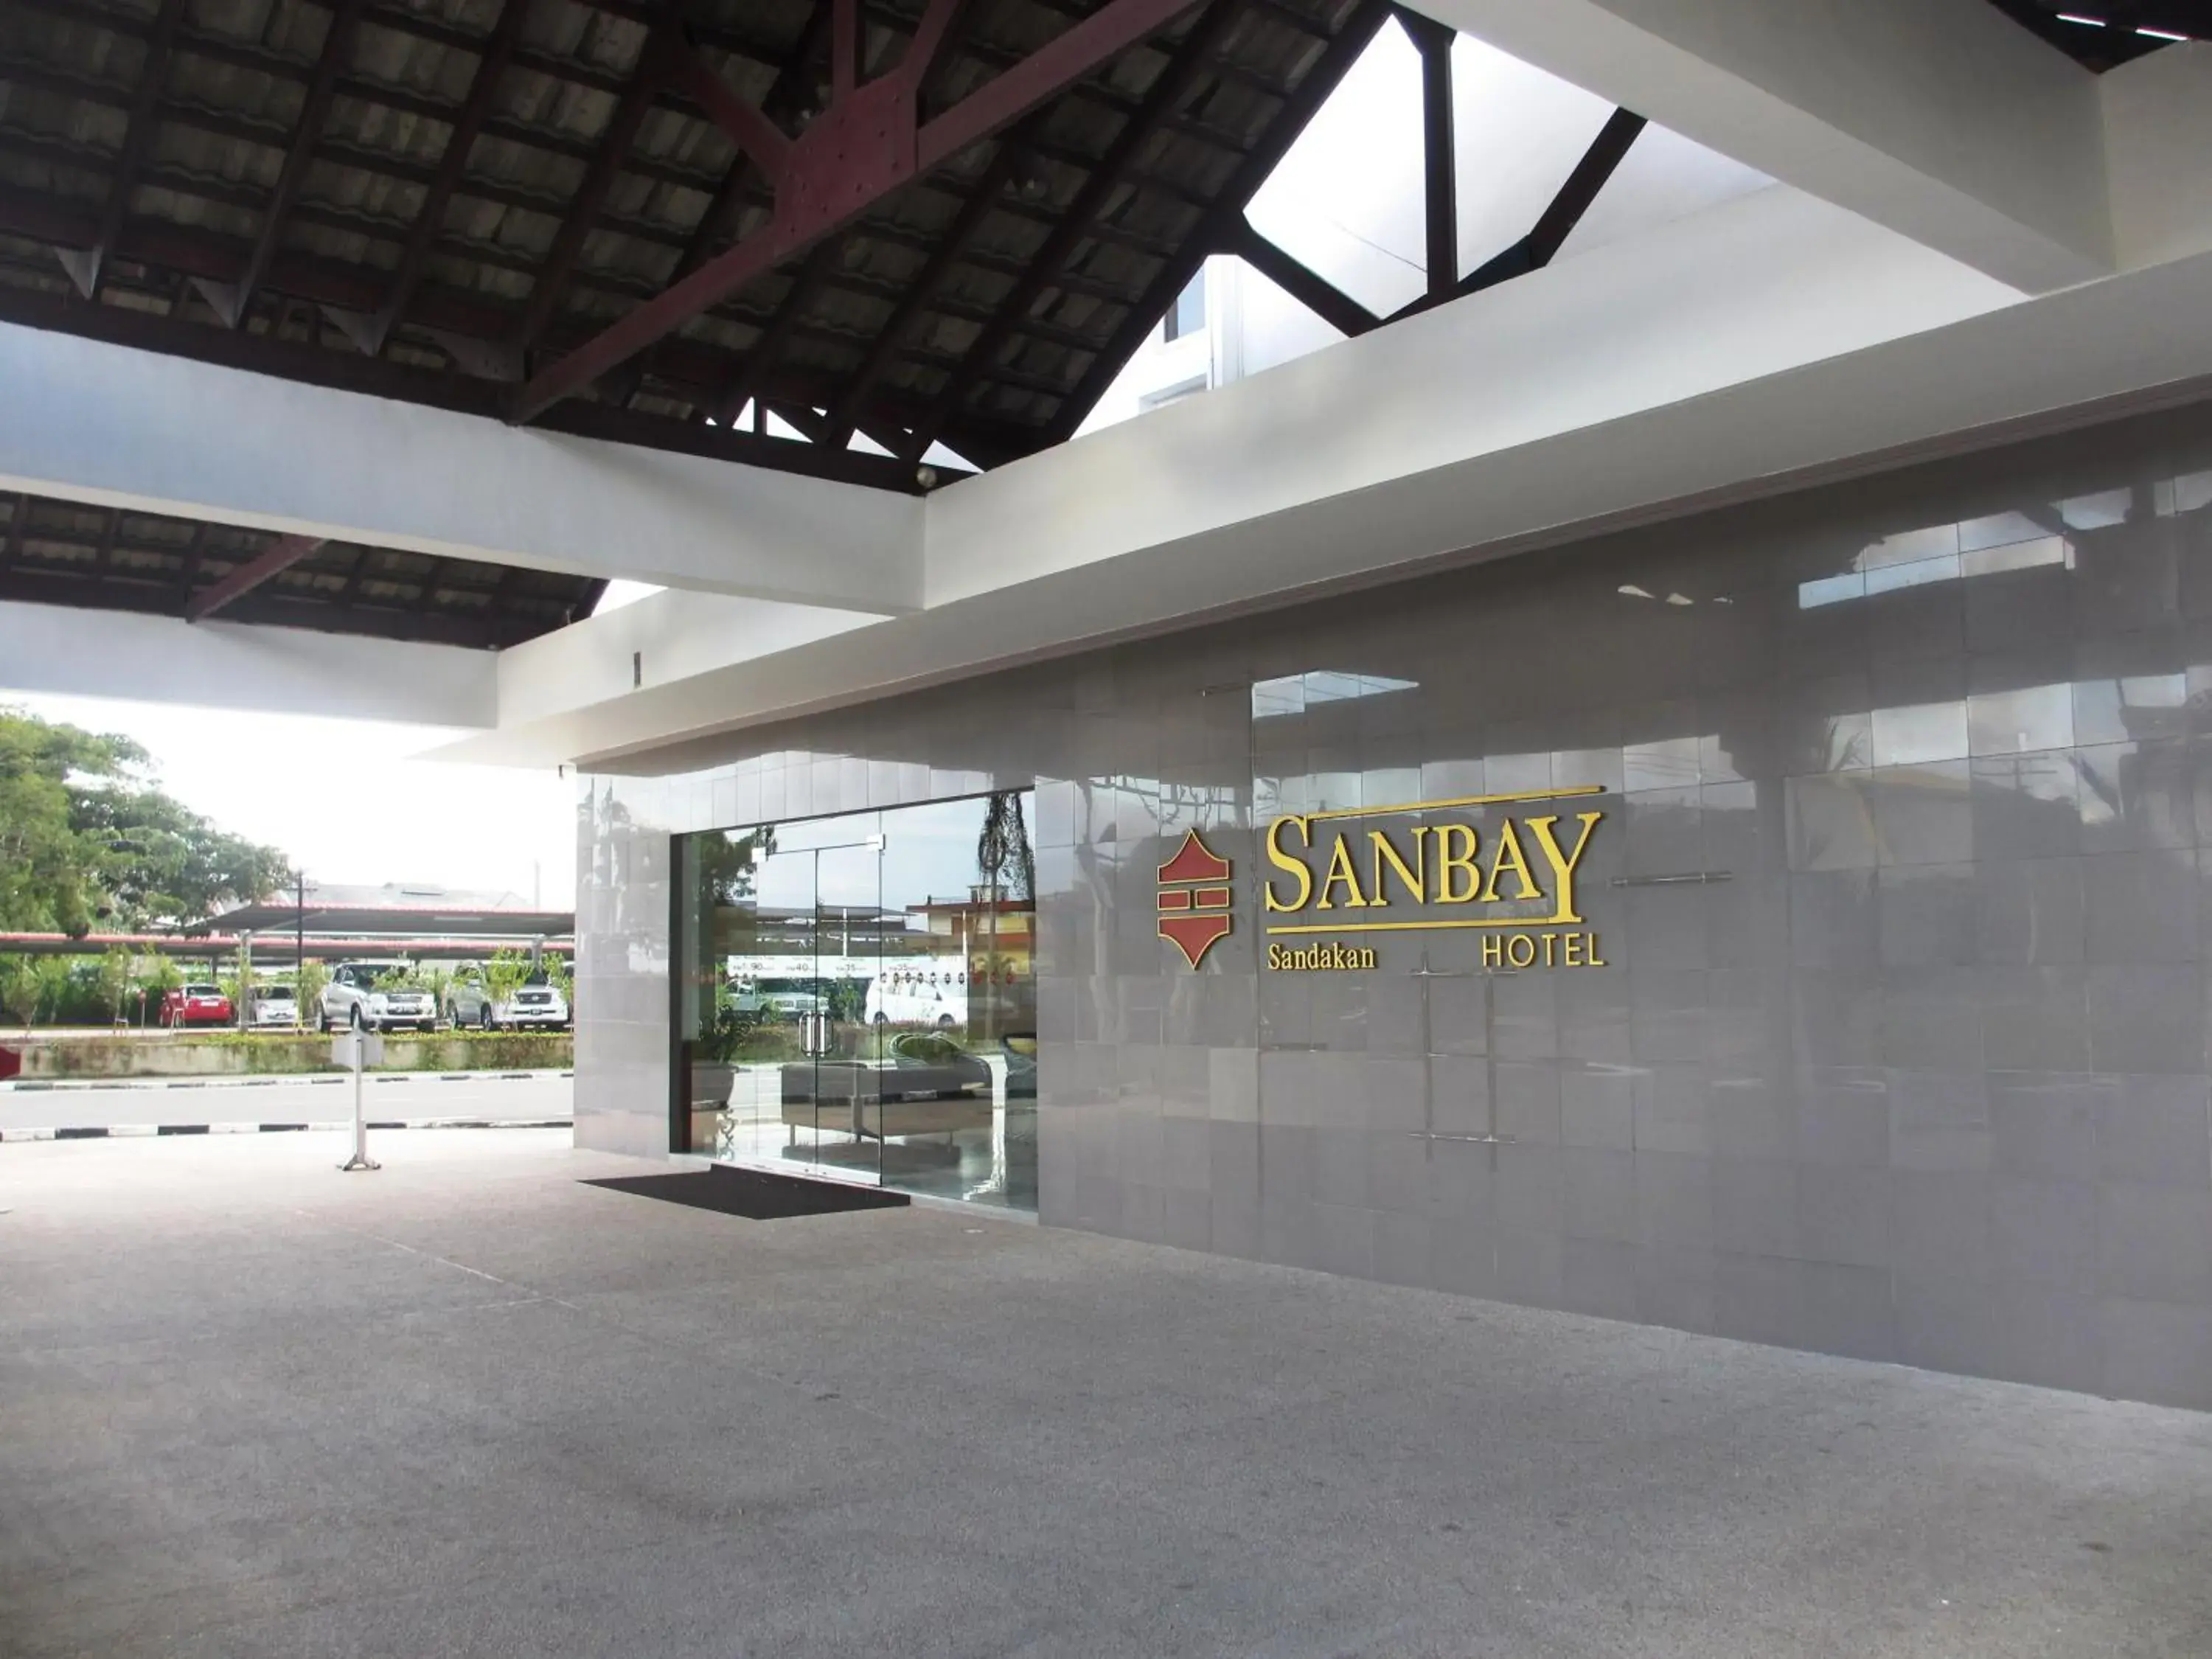 Property logo or sign in Sanbay Hotel